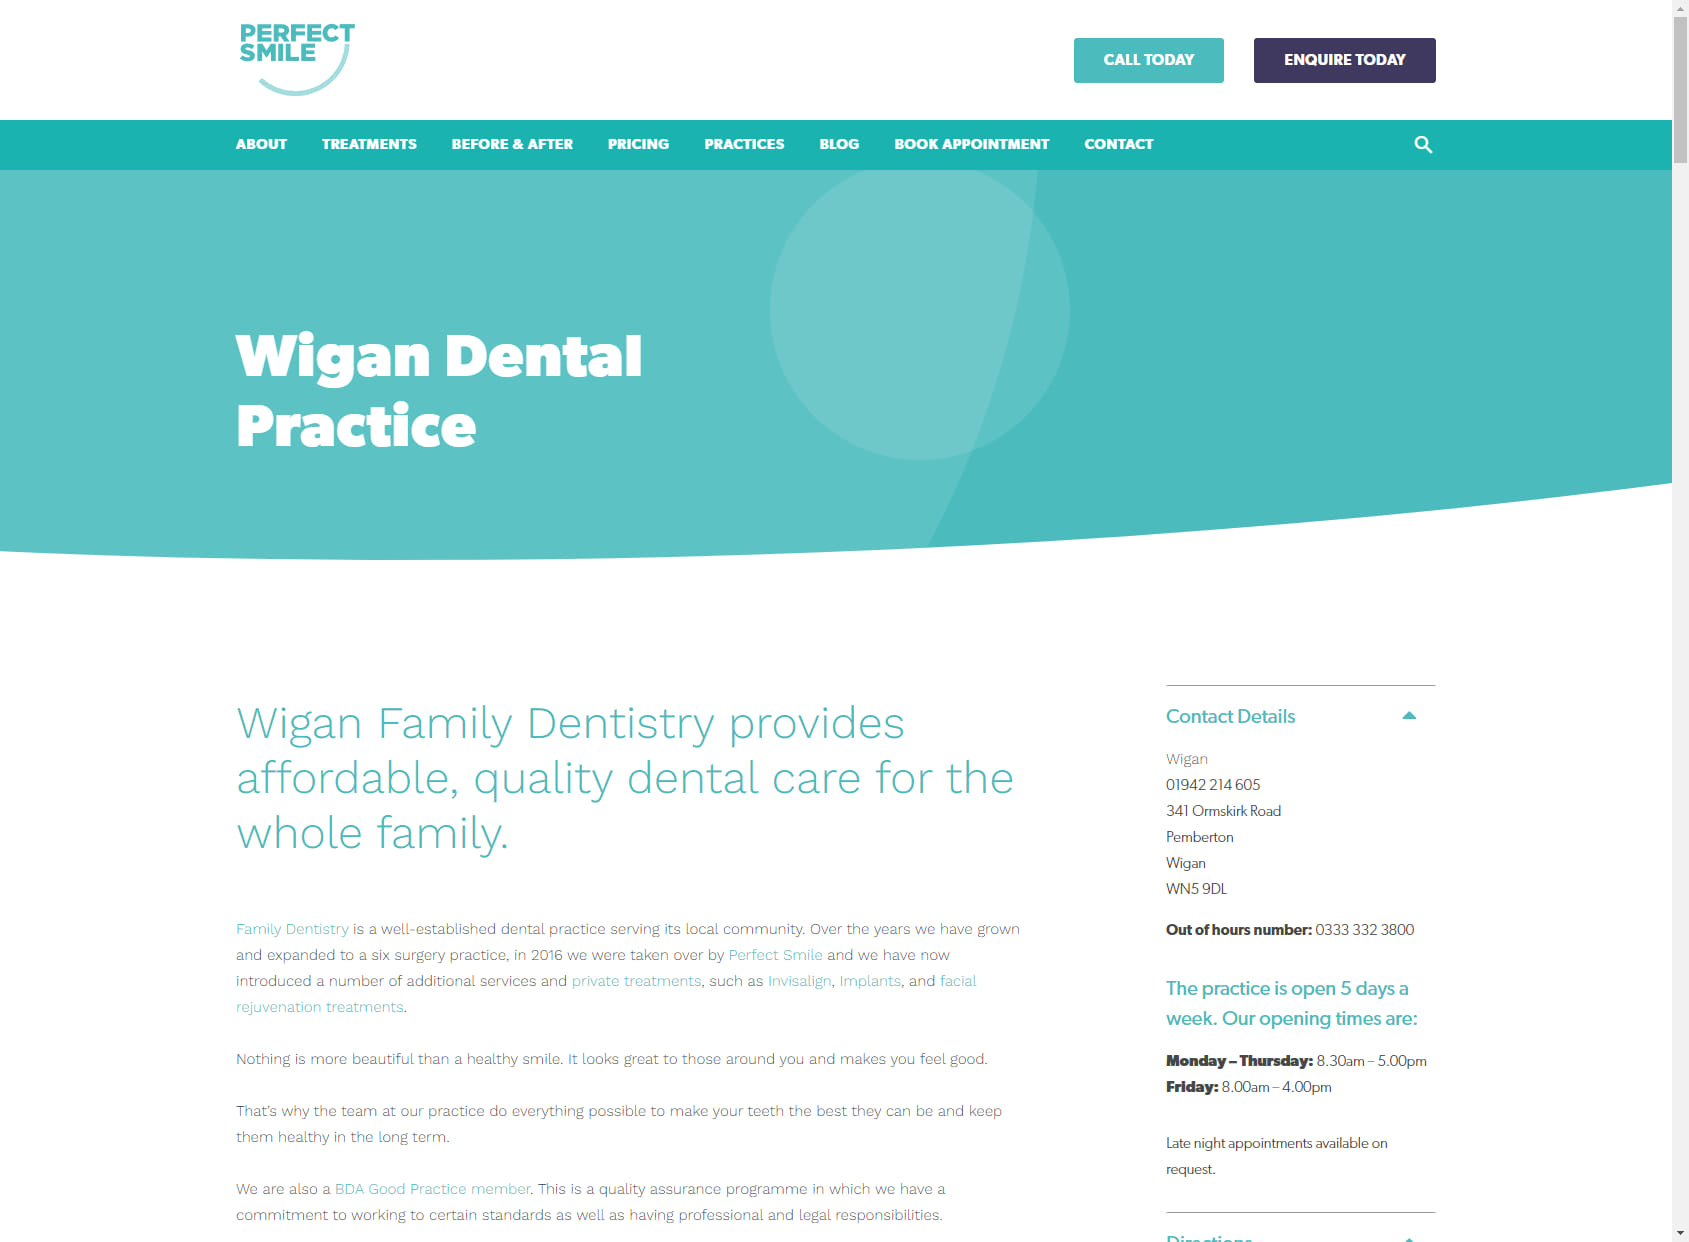 Perfect Smile Dental - Wigan